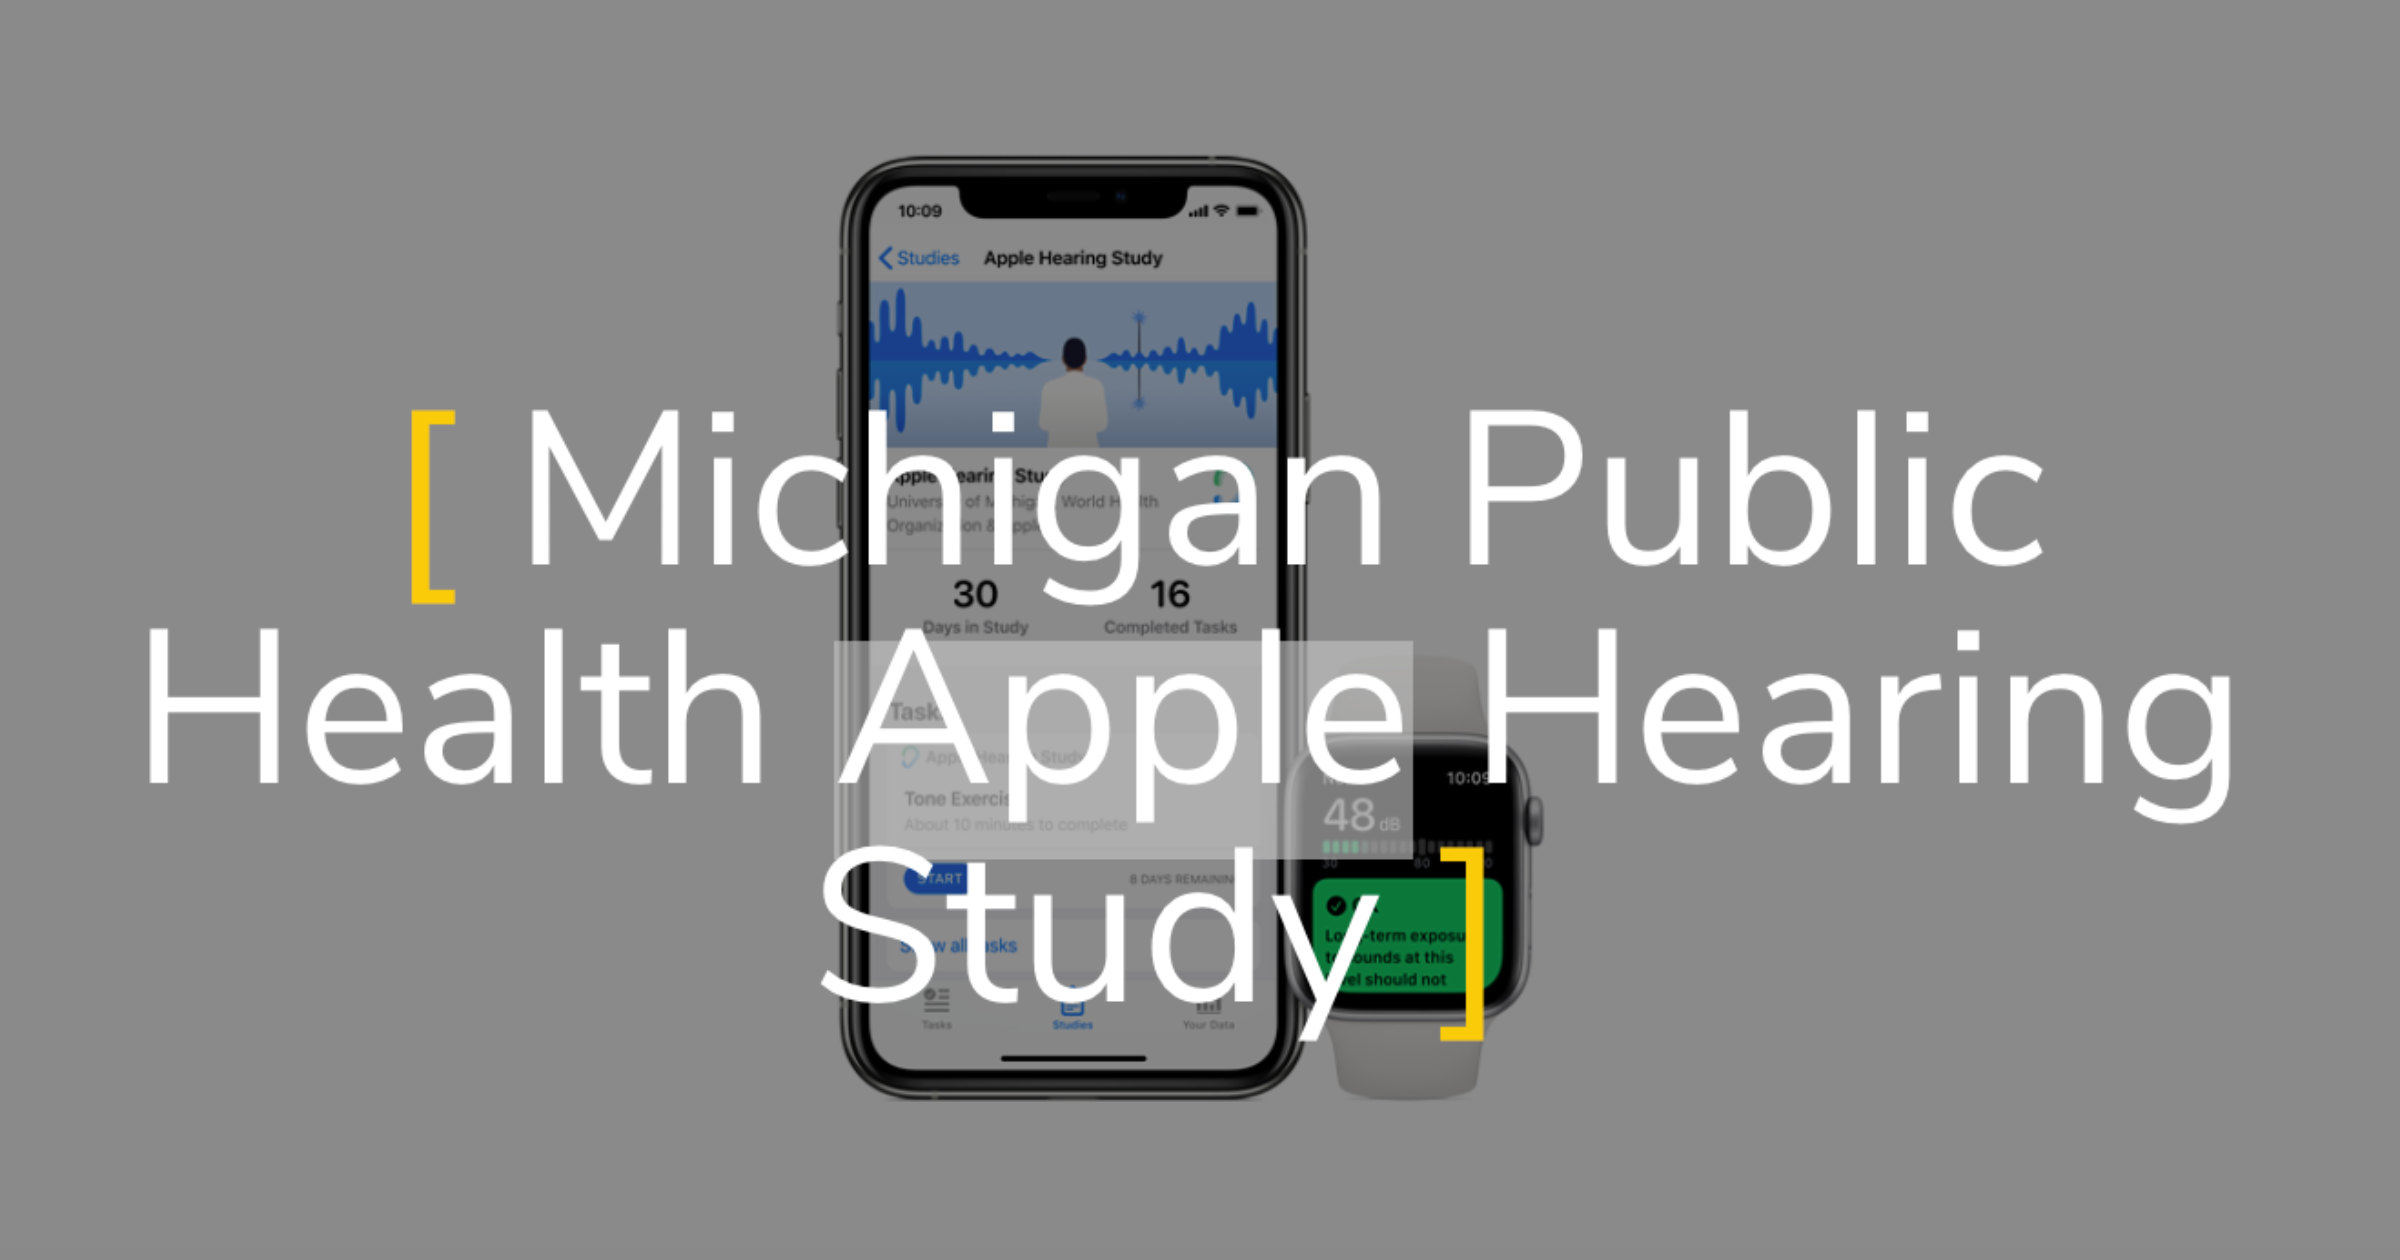 Michigan Public Health Apple Hearing Study